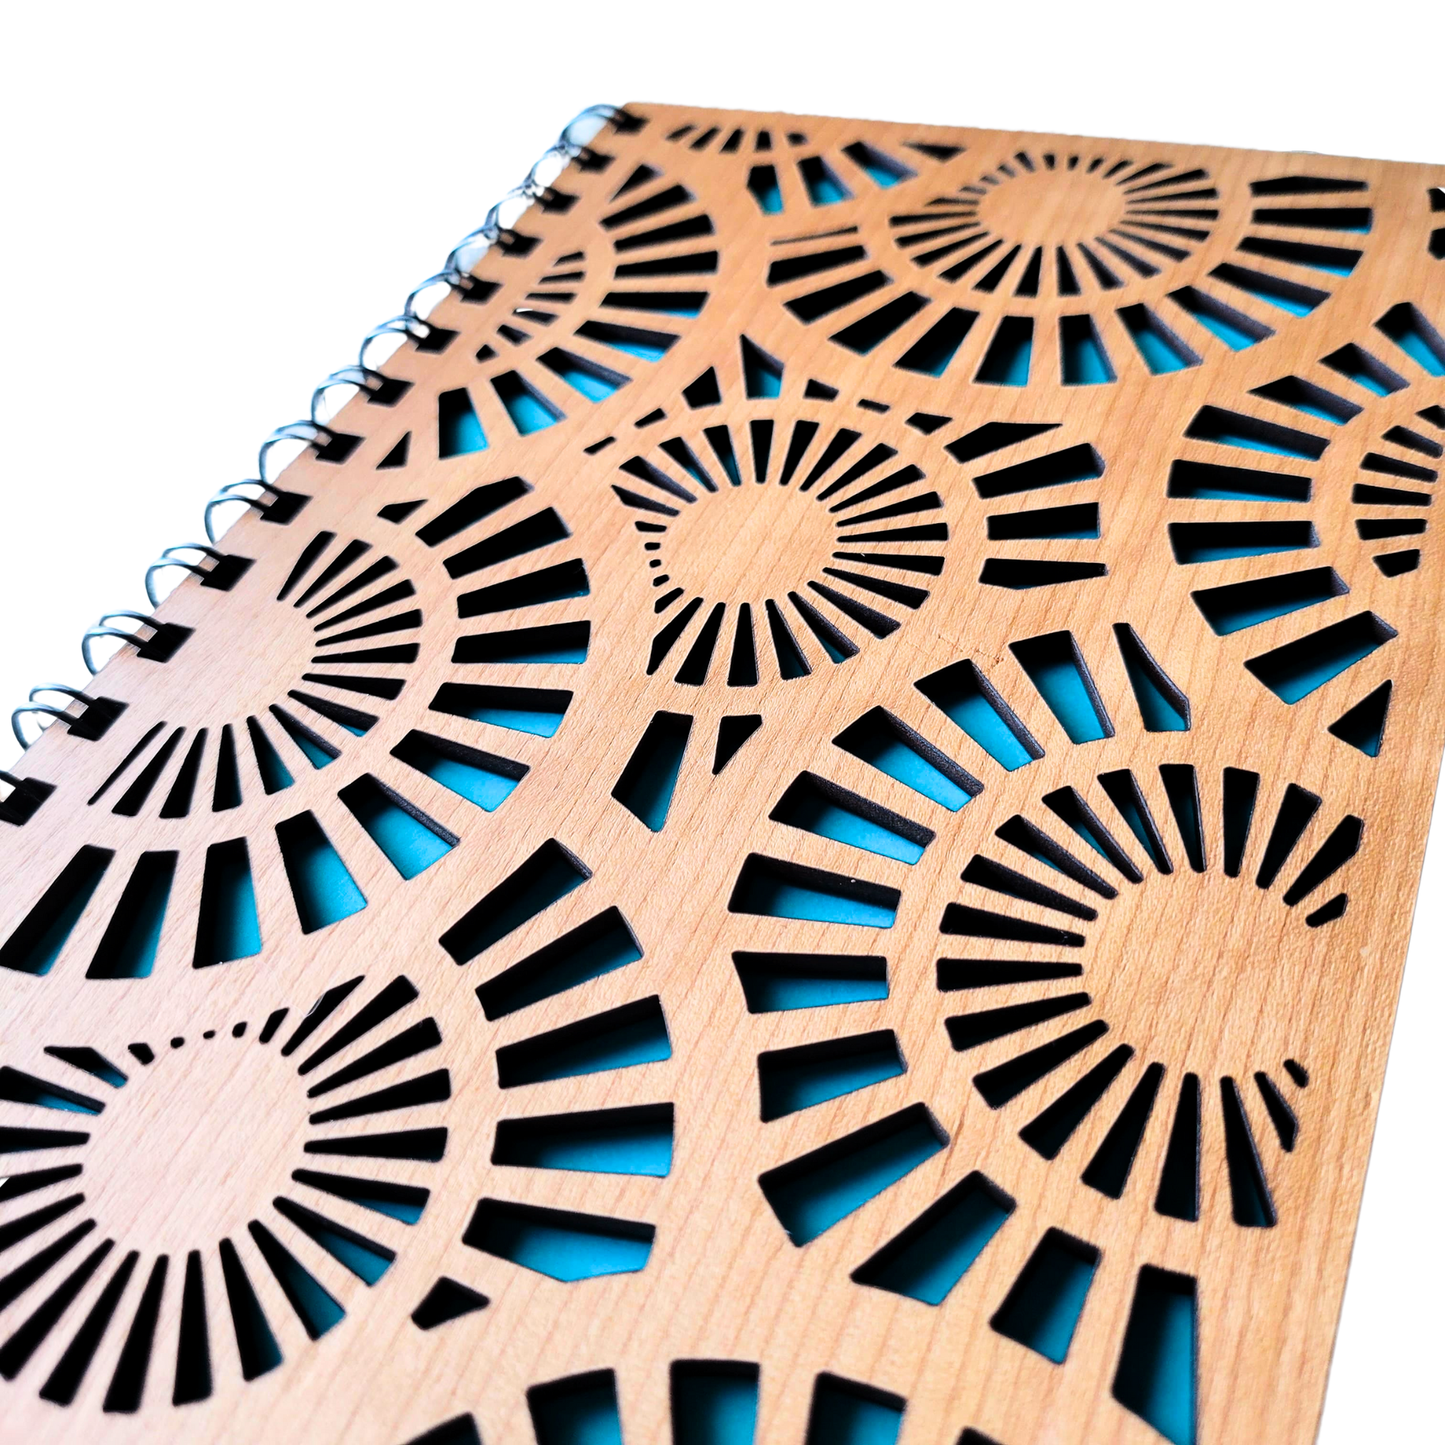 Zen Spirals Wood Journal - Stationery, Journals, Notebook: Lined